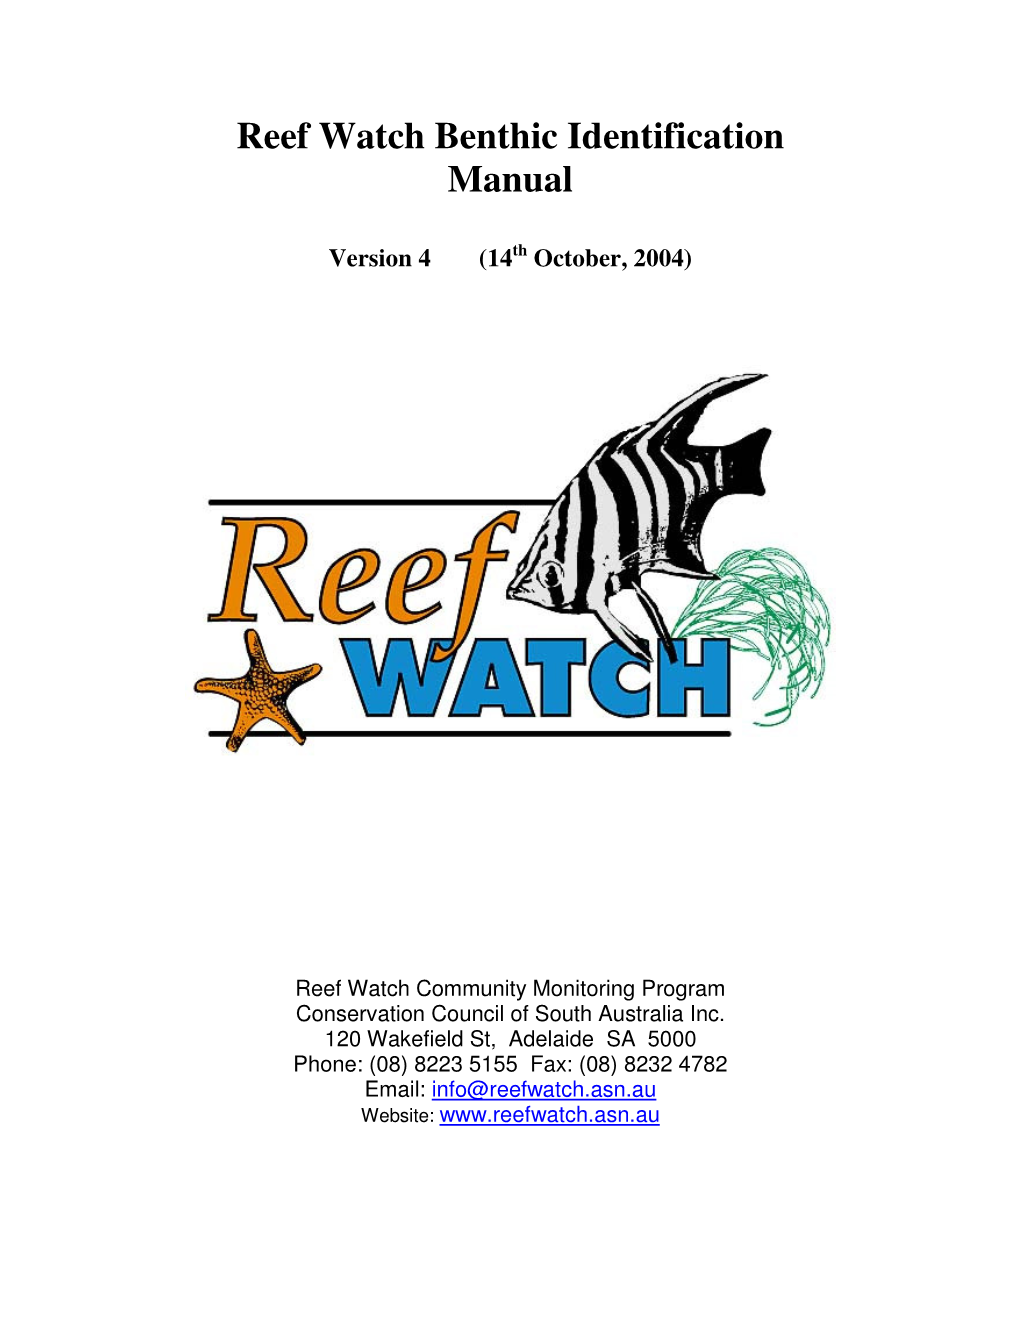 Reef Watch Benthic Identification Manual